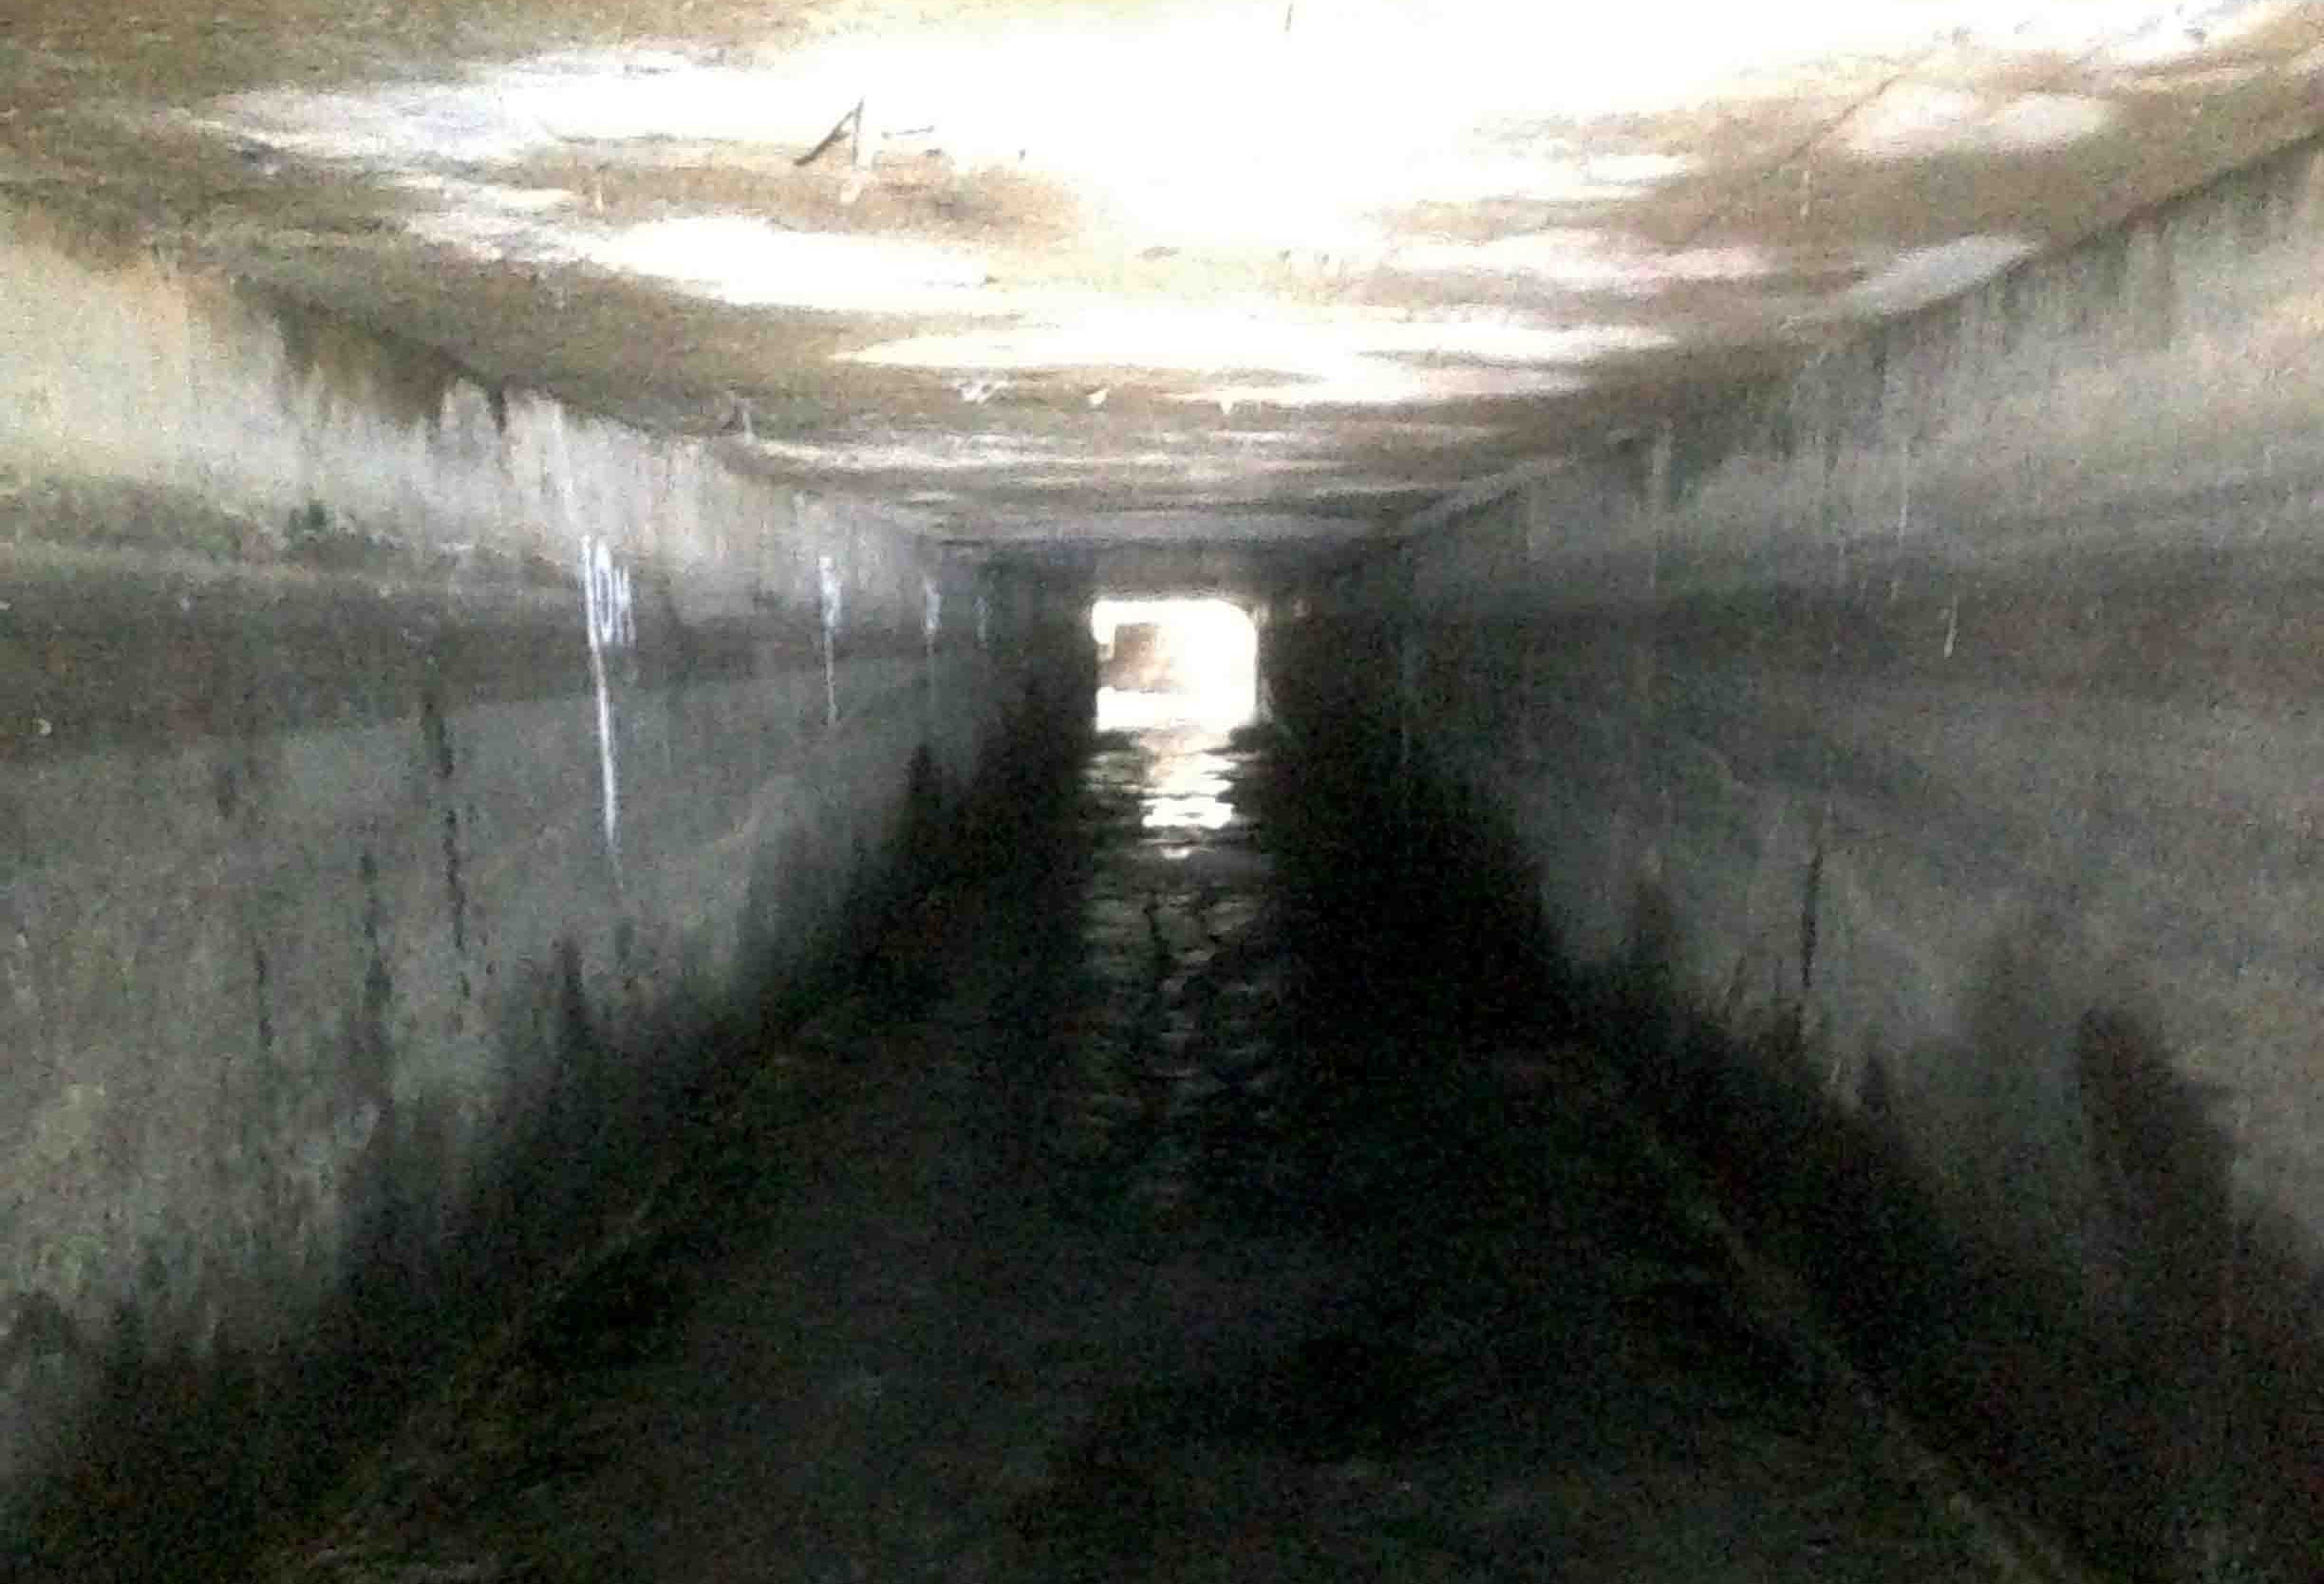 Tunnel clogged by debris